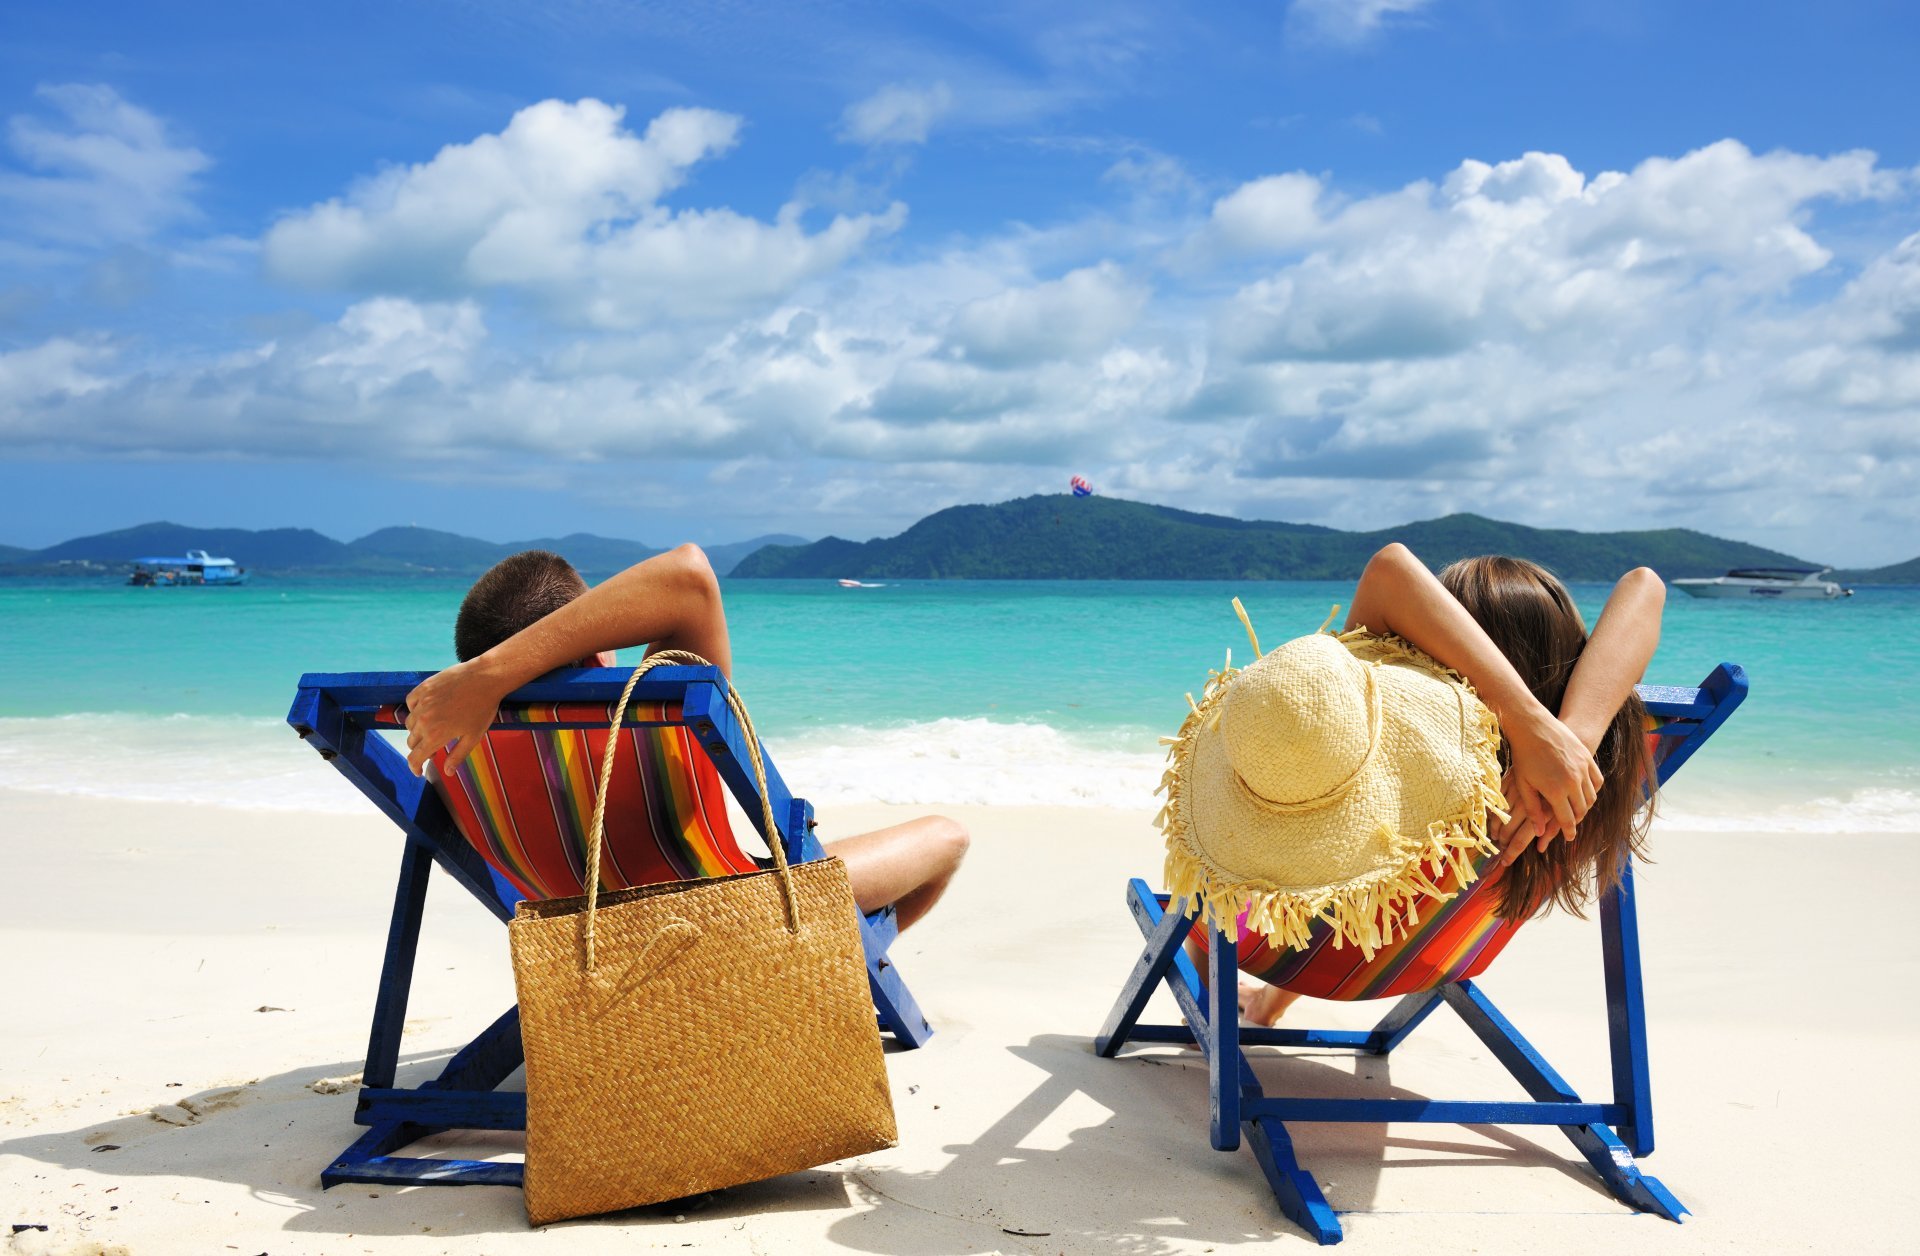 vacation-relax-couple-man-woman-boy-girl-people-beach-sand-sea-water-sky-clouds-islands-beach-chairs-bag-hat-summer-boats-tropical-landscape-nature-holiday-4845e0e6371a78c3d09e0a68991d68e1.jpg